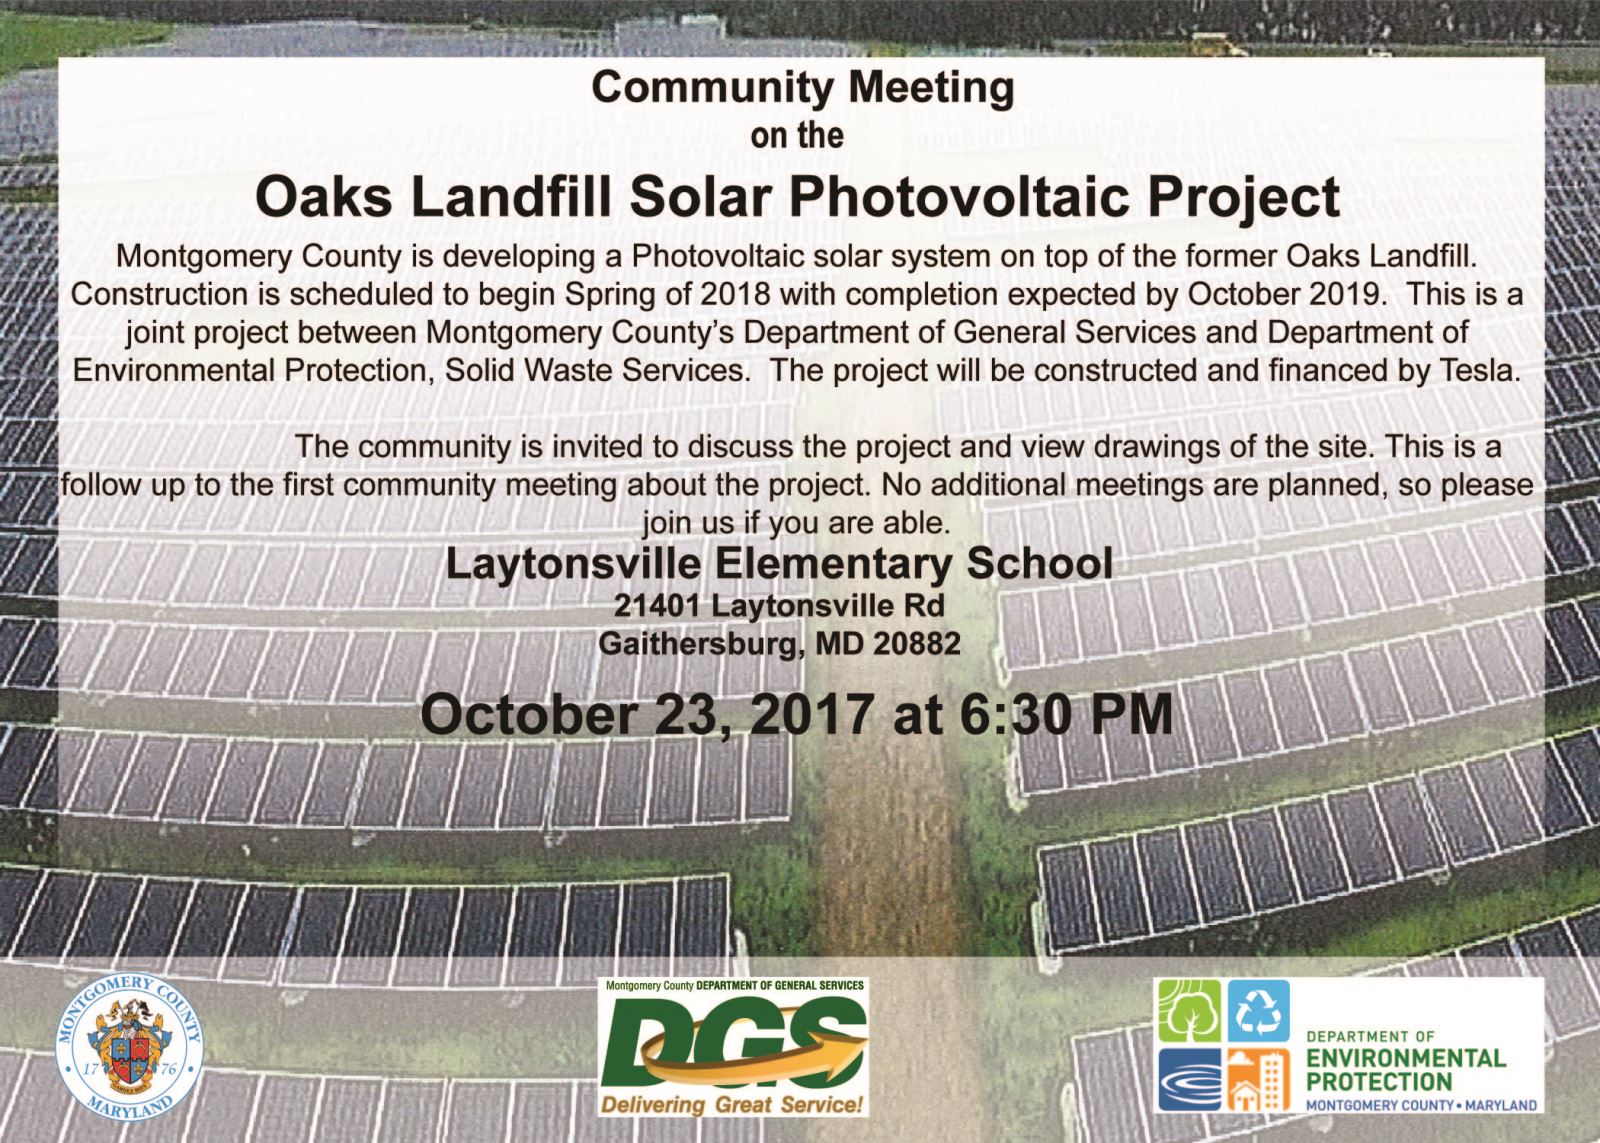 Community Meeting on Oaks Landfill Solar Project